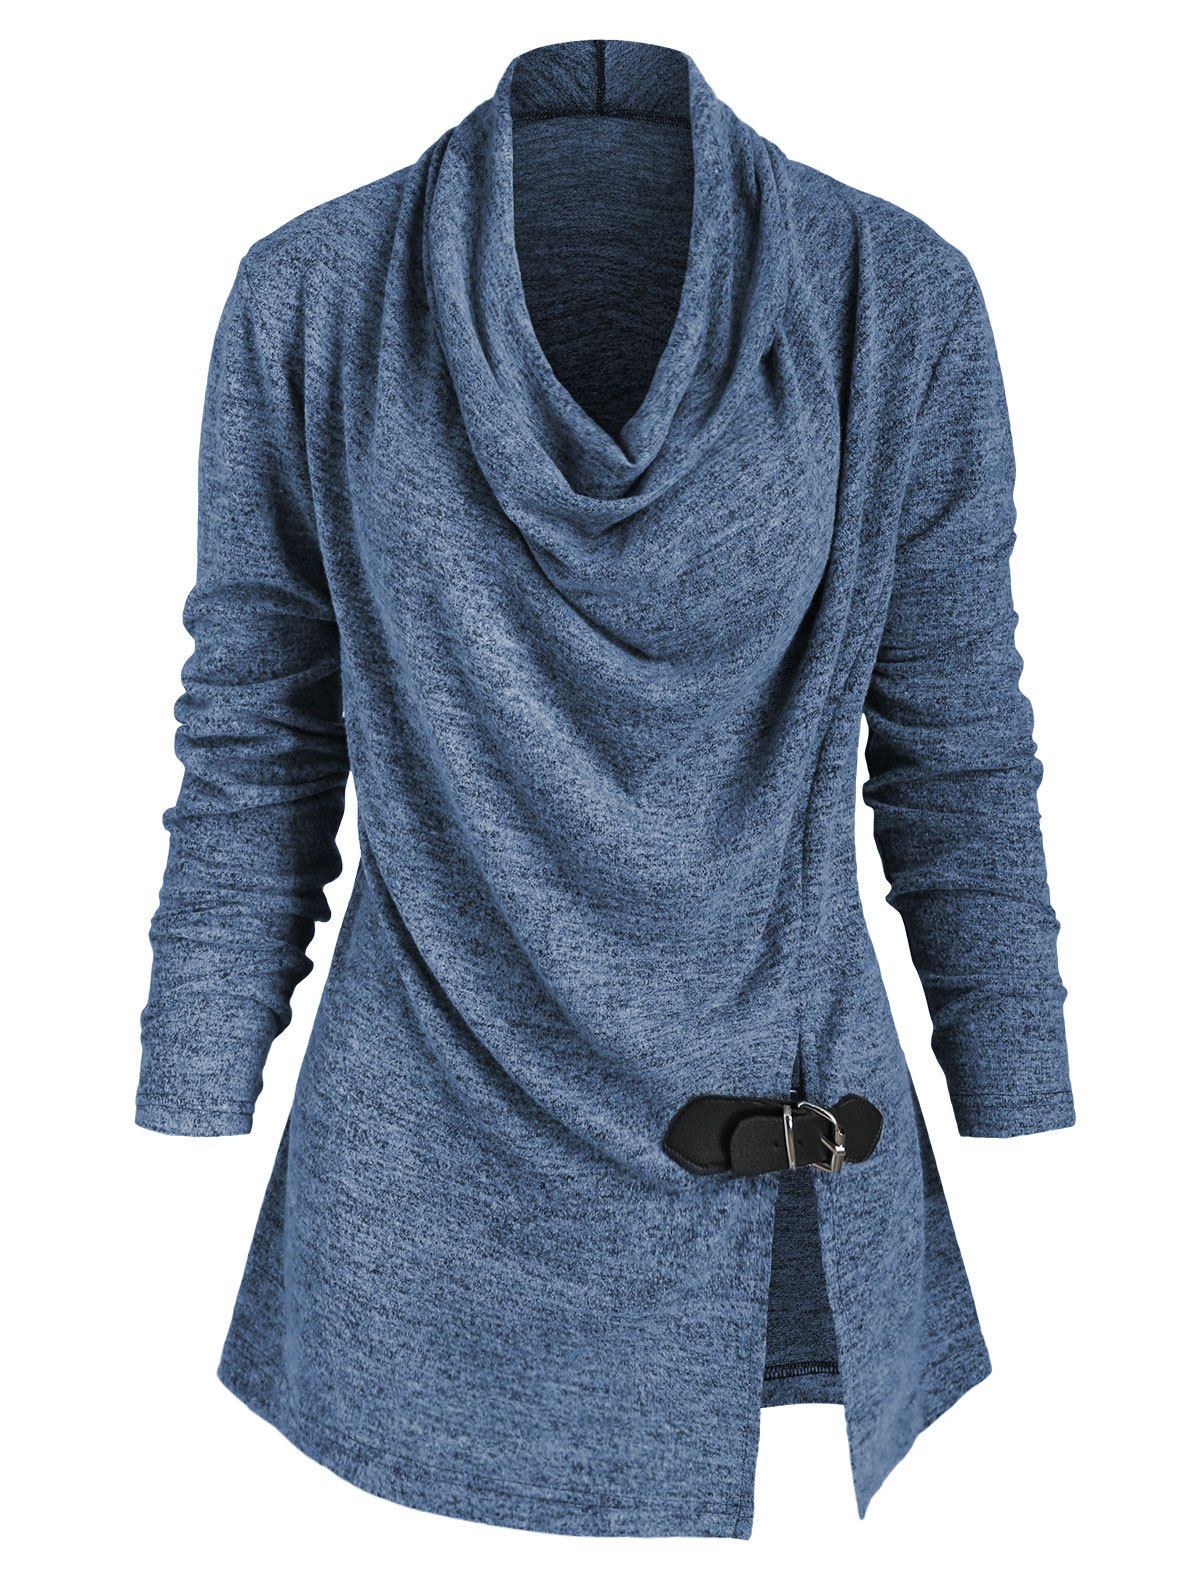 Heather Cowl Neck Slit Buckle Knitwear - LAPIS BLUE XL